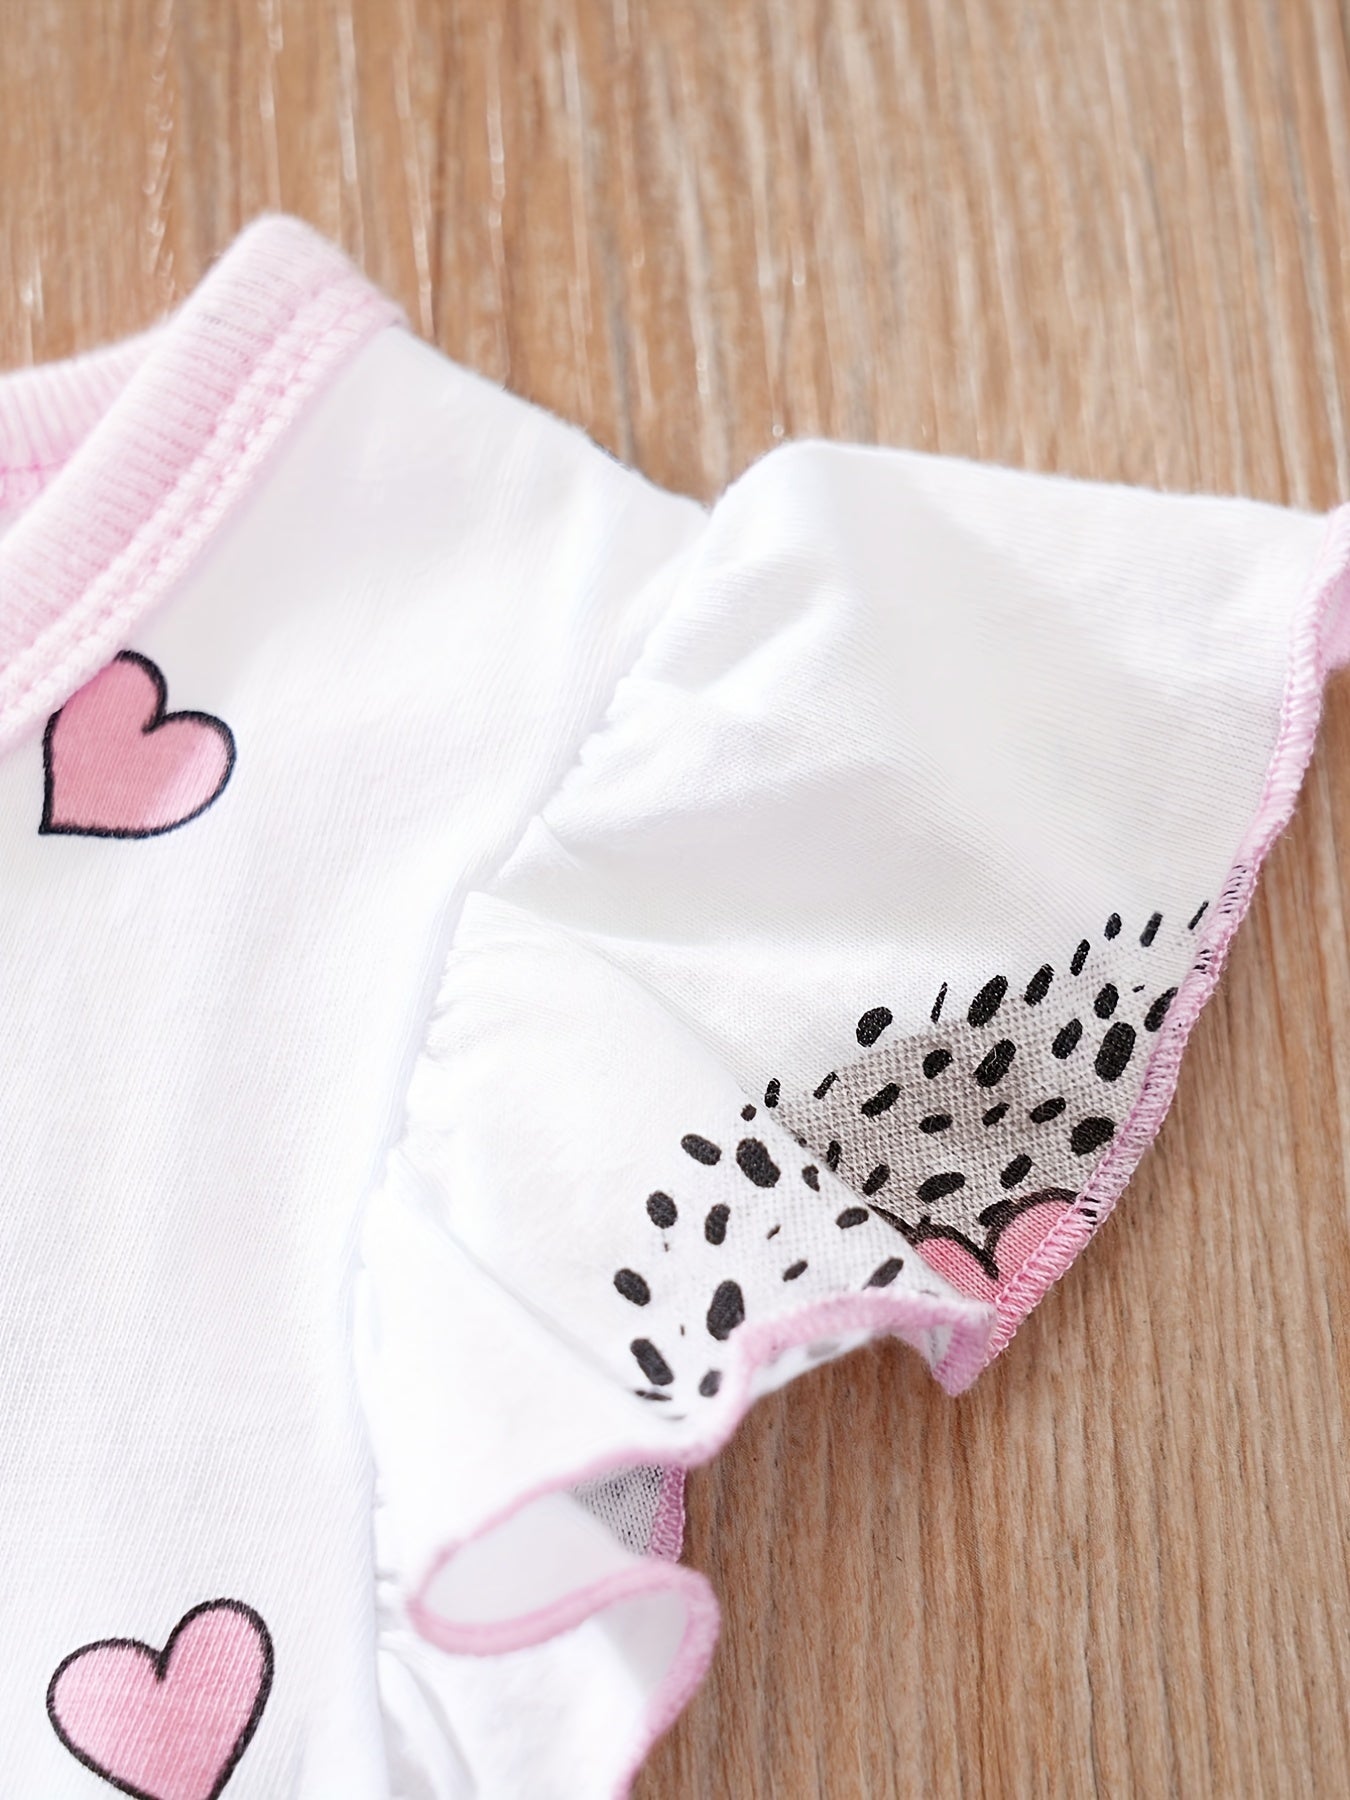 Comfy & Cute: Hedgehog Print Flutter Sleeve Baby Girls Jumpsuit